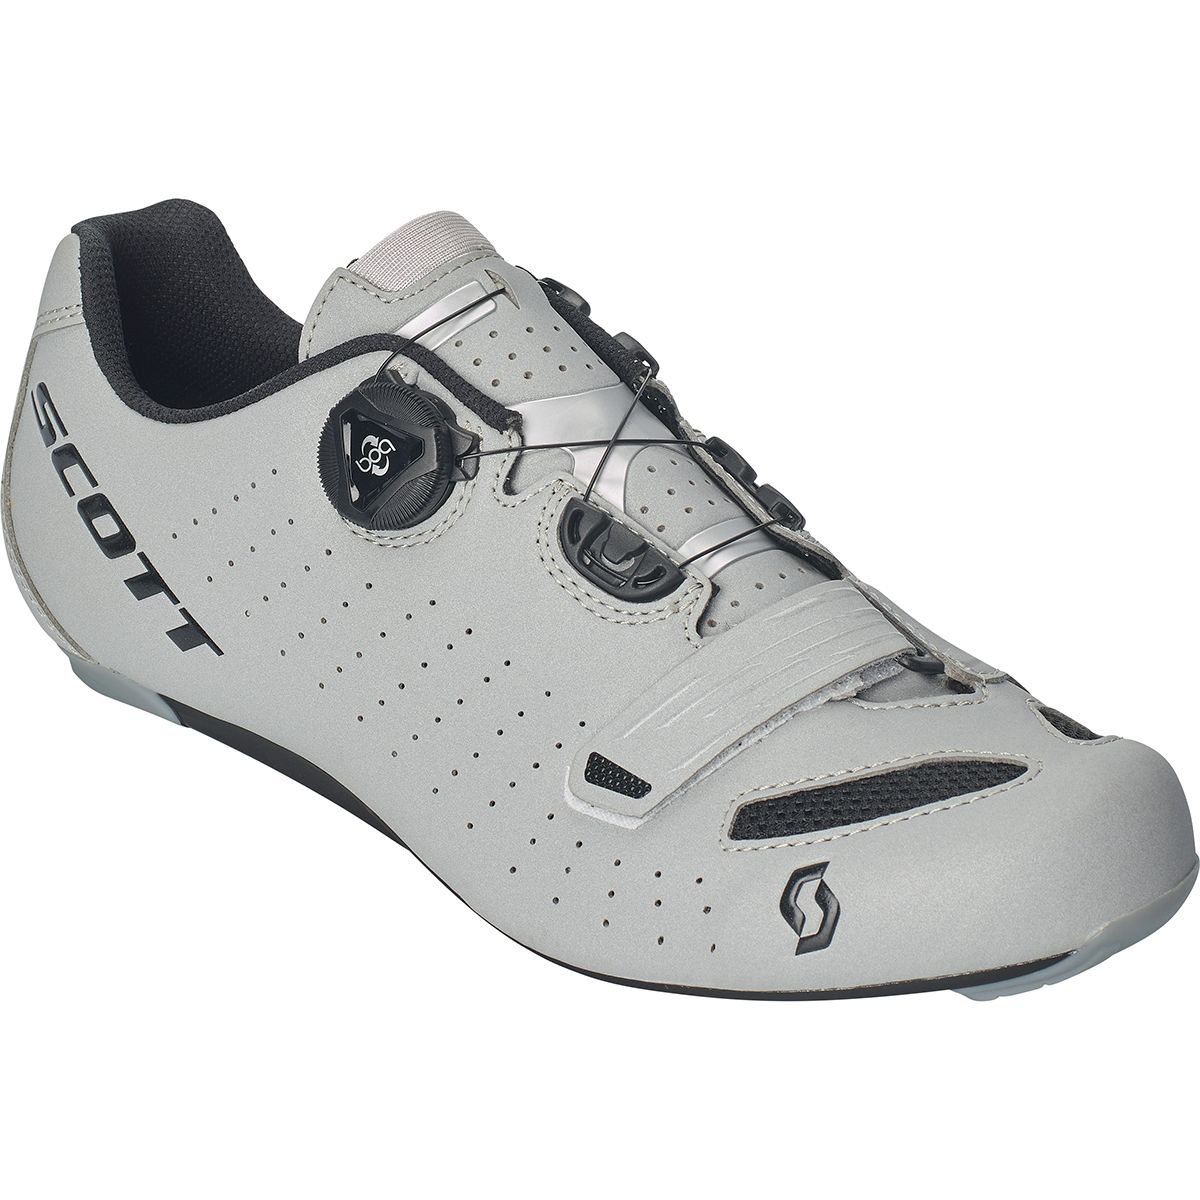 Scott Road Comp Boa Reflective Cycling Shoe - Men's